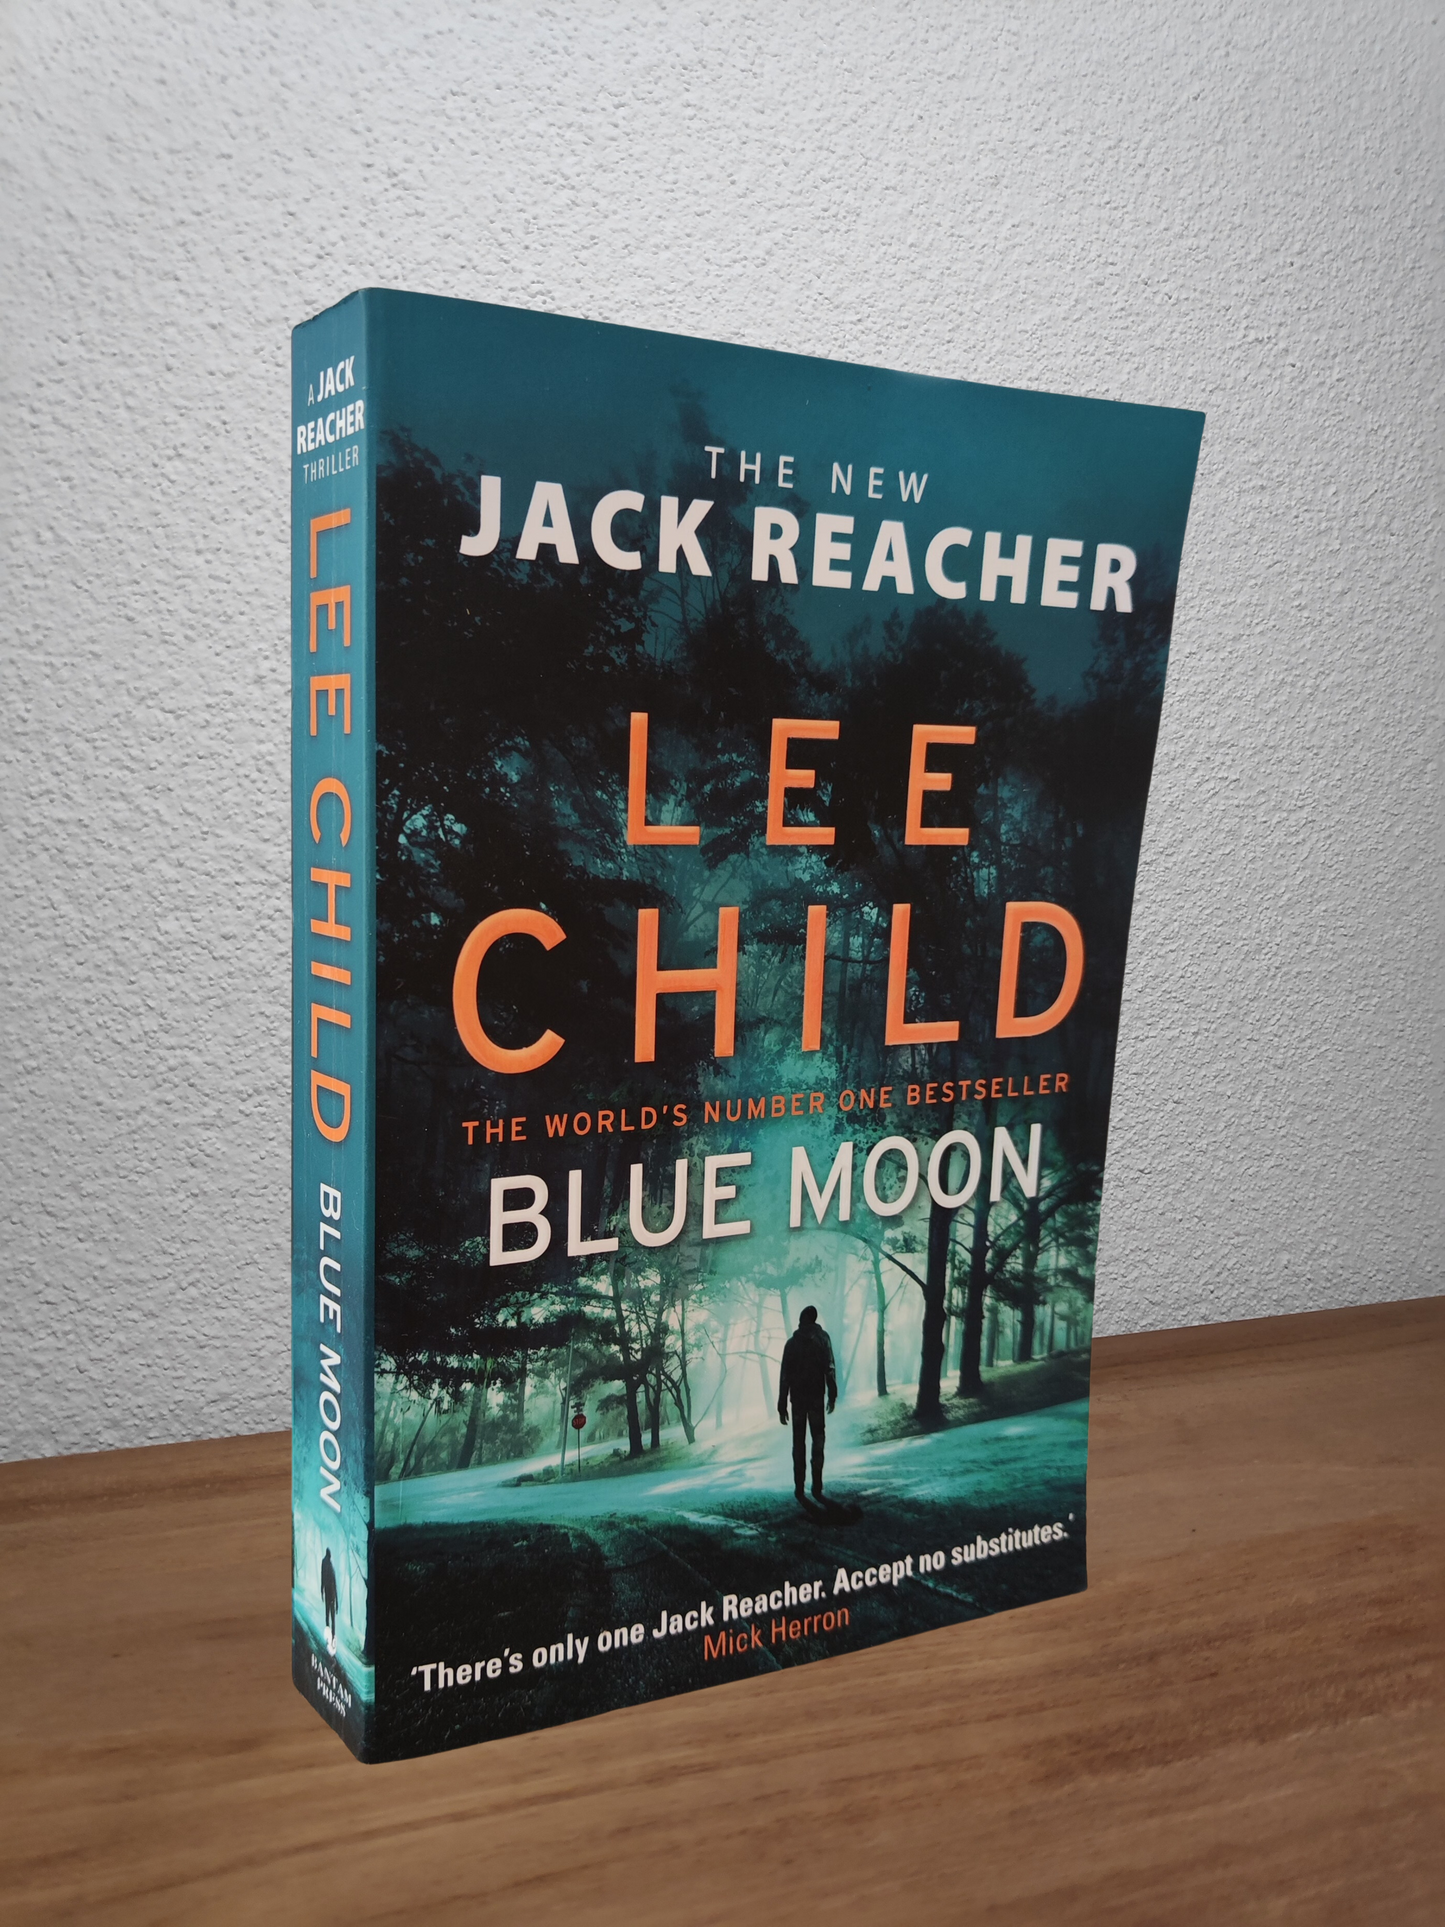 Lee Child - Blue Moon (Jack Reacher #24)